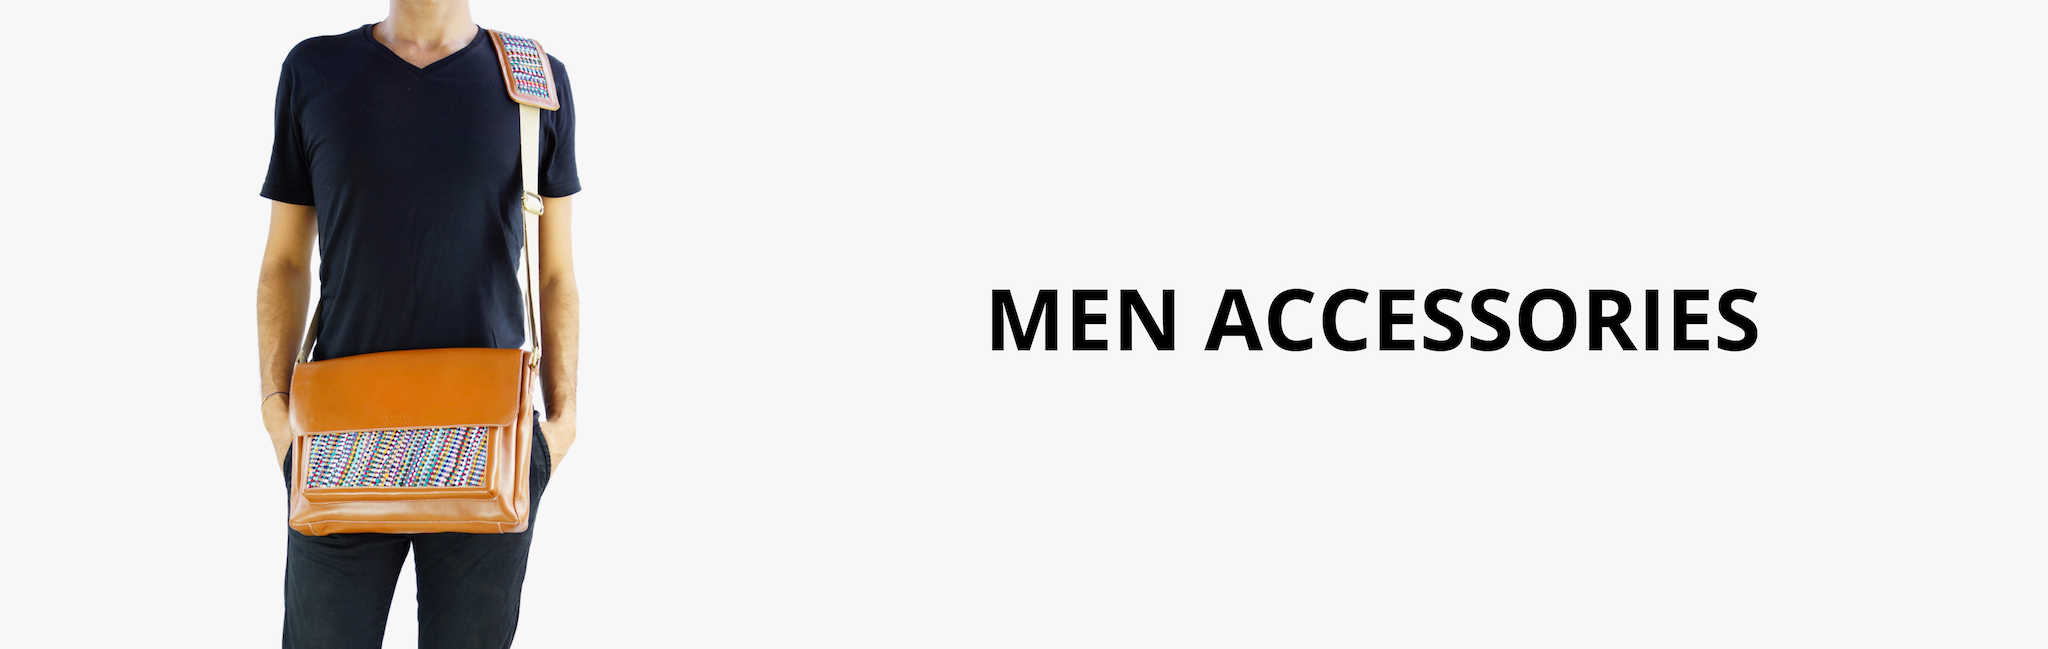 Men Accessories